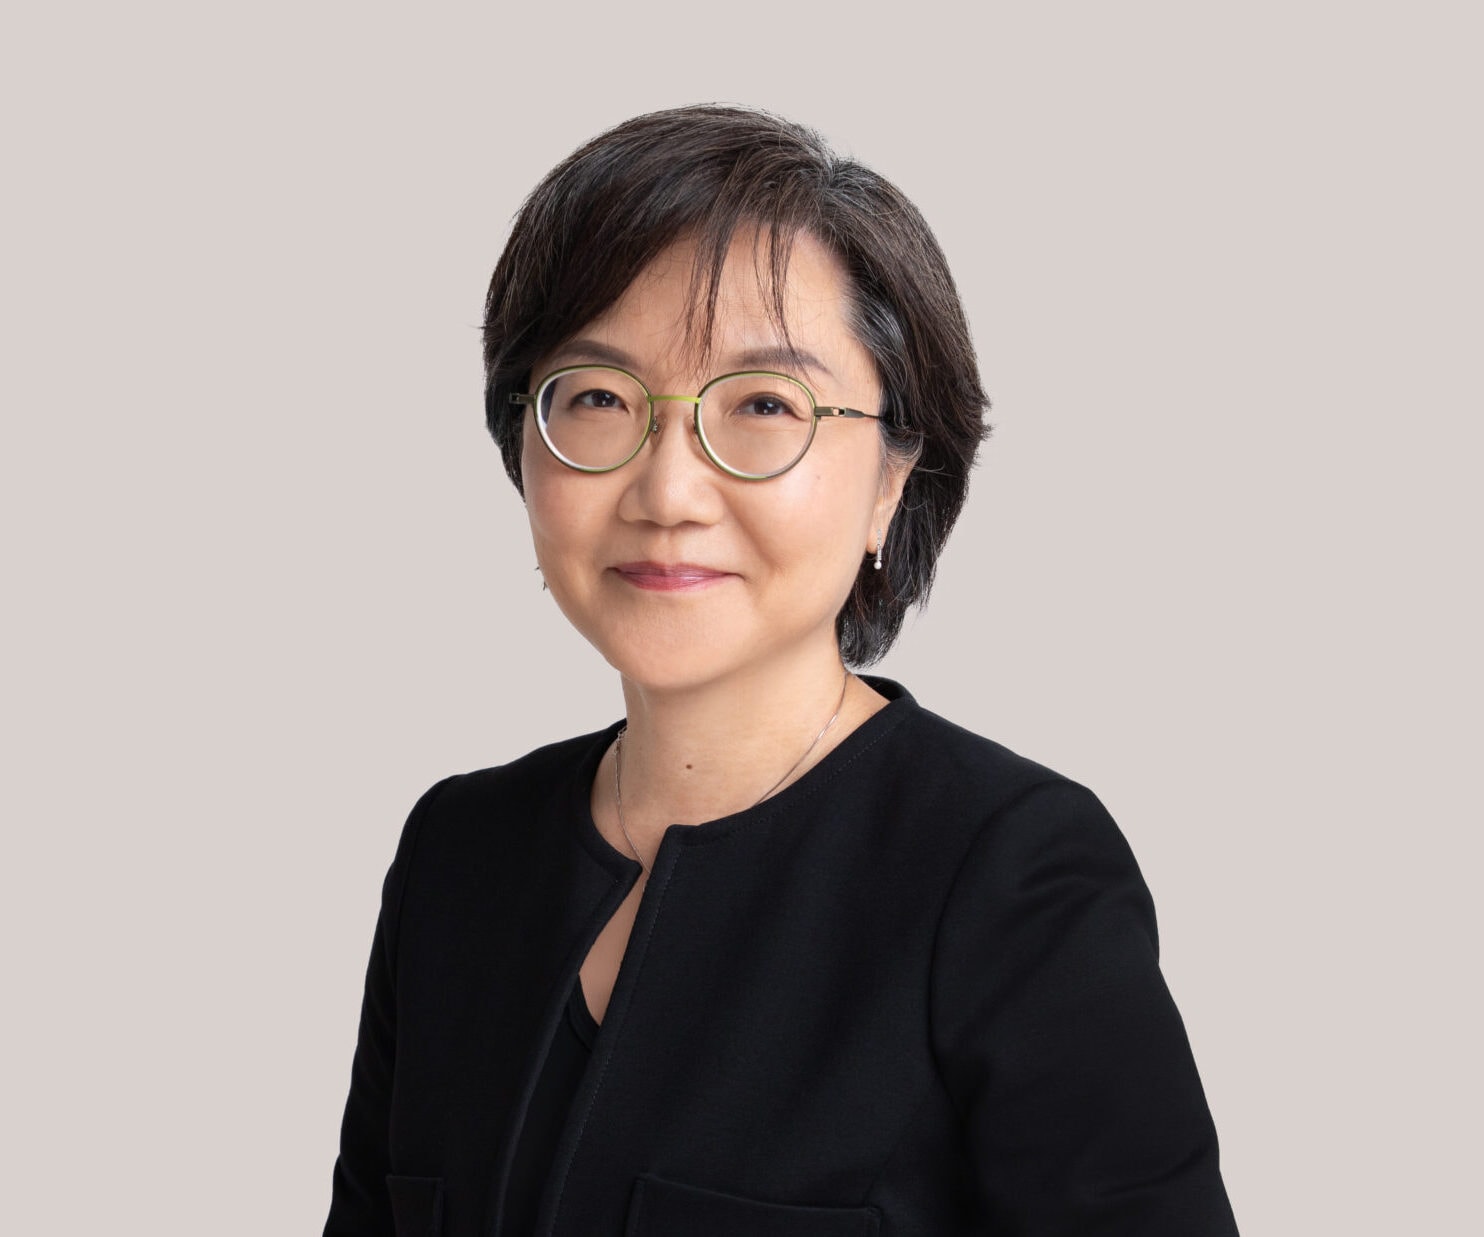 Vera Sung - Intellectual Property lawyer, Partner at Oldham, Li & Nie, Hong Kong